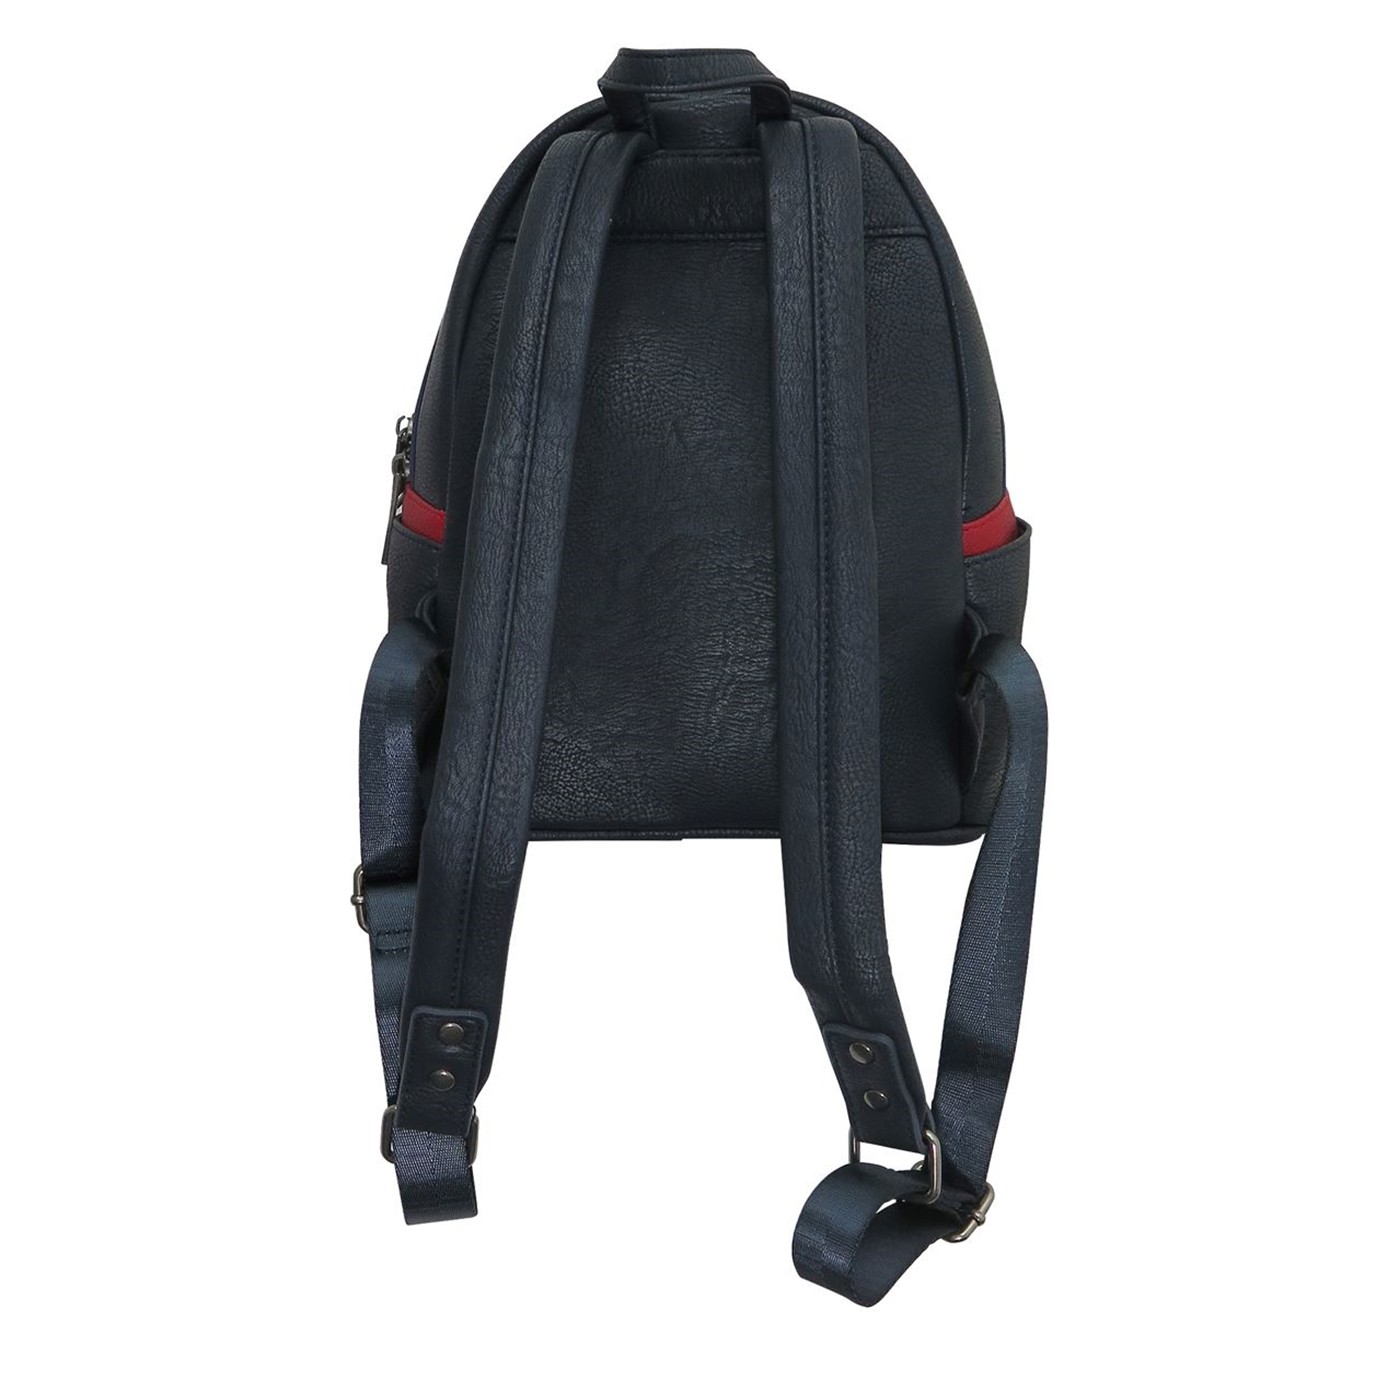 Captain America Star Logo Loungefly Mini Backpack